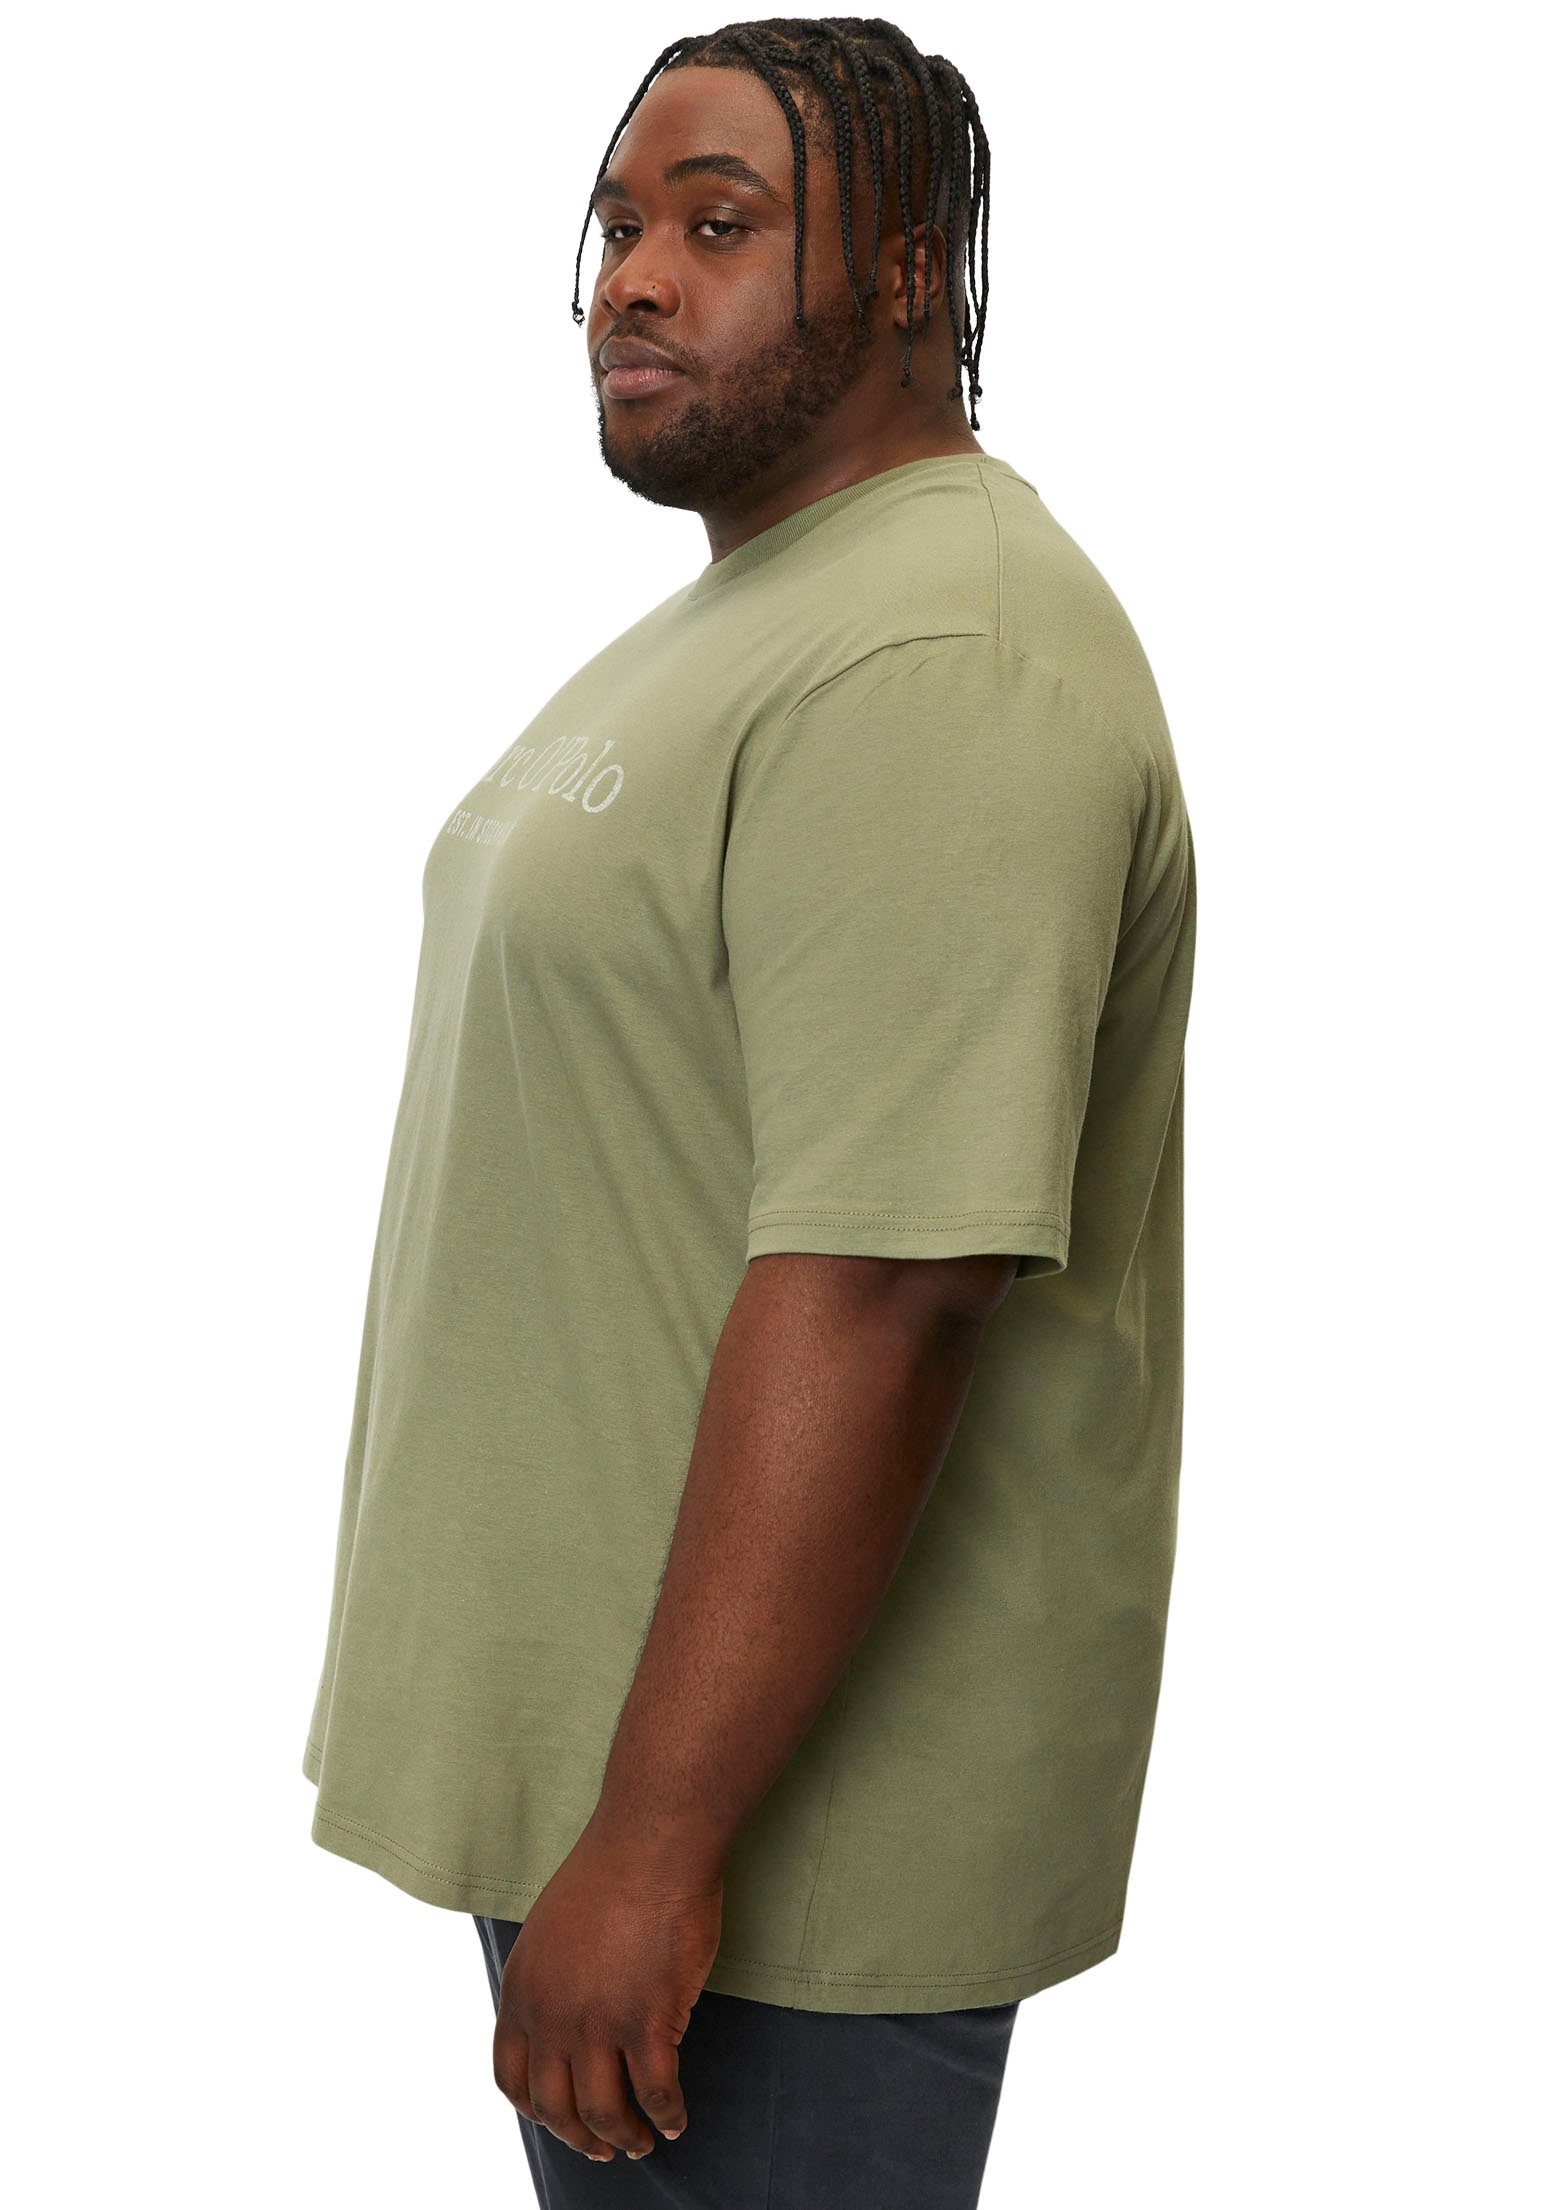 Marc O'Polo in olive T-Shirt Big&Tall-Größen